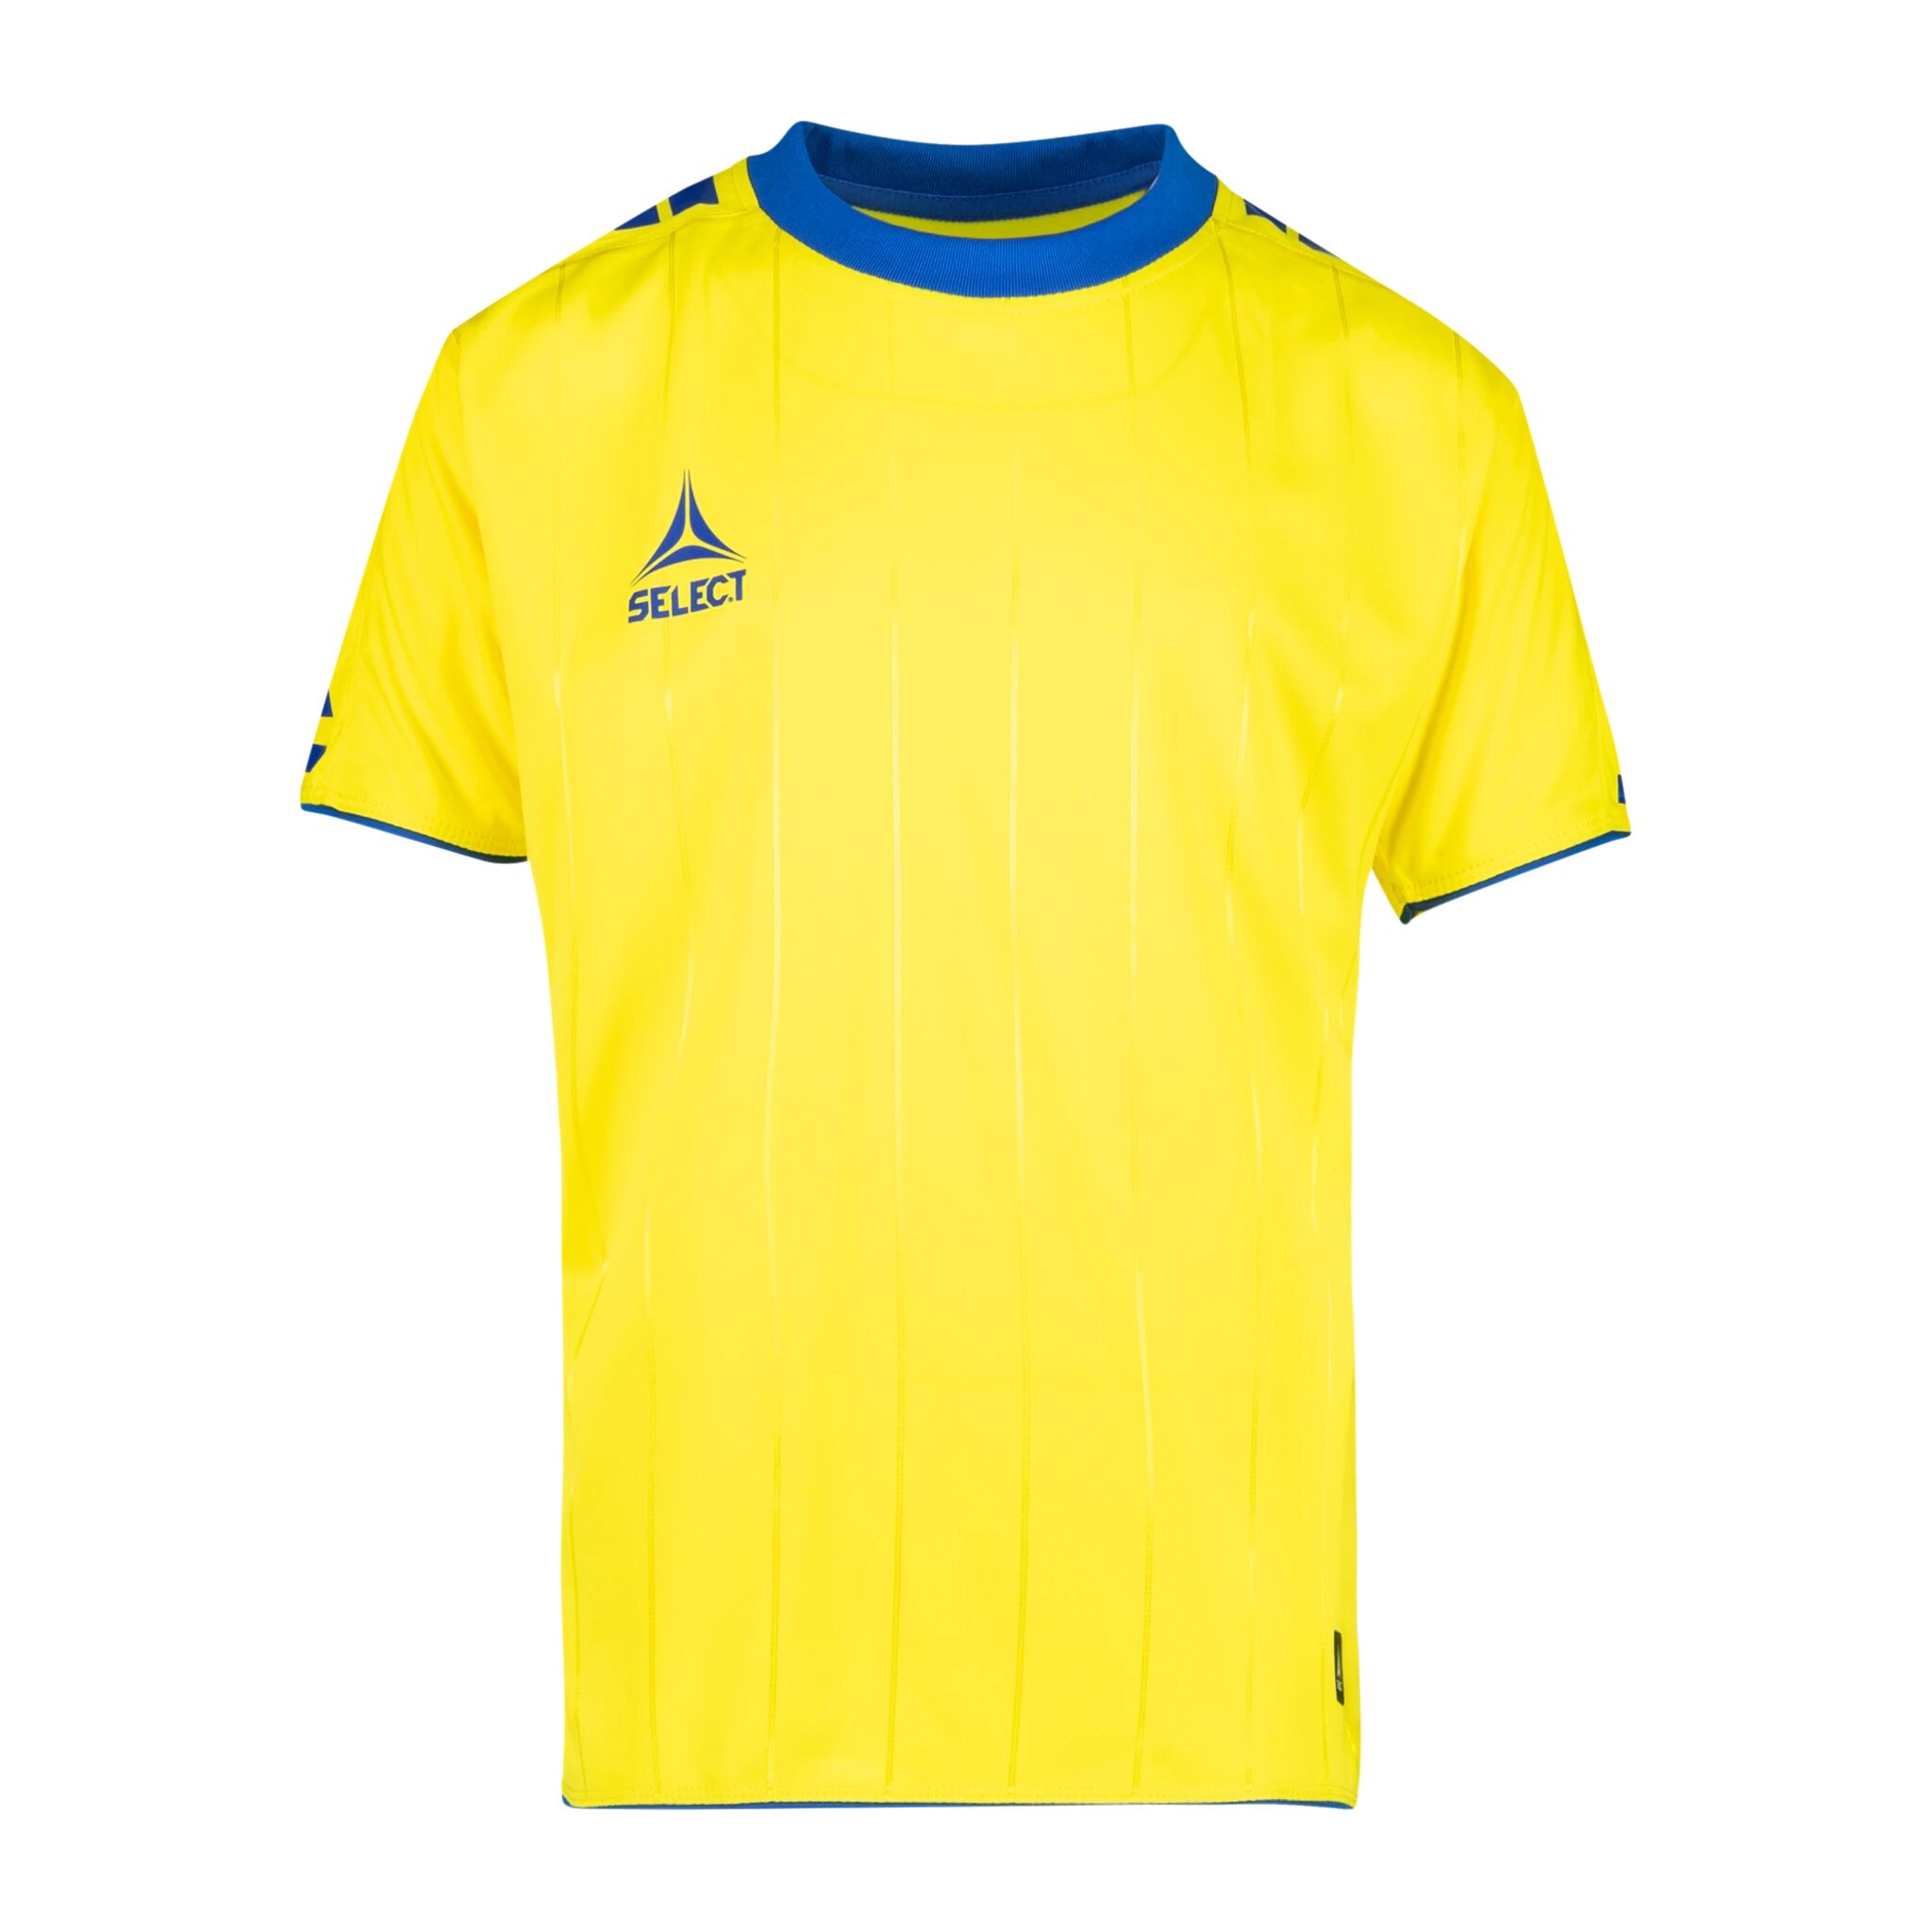 Select Player shirt S/S Argentina, fotballtrøye senior 152 Yellow/Blue